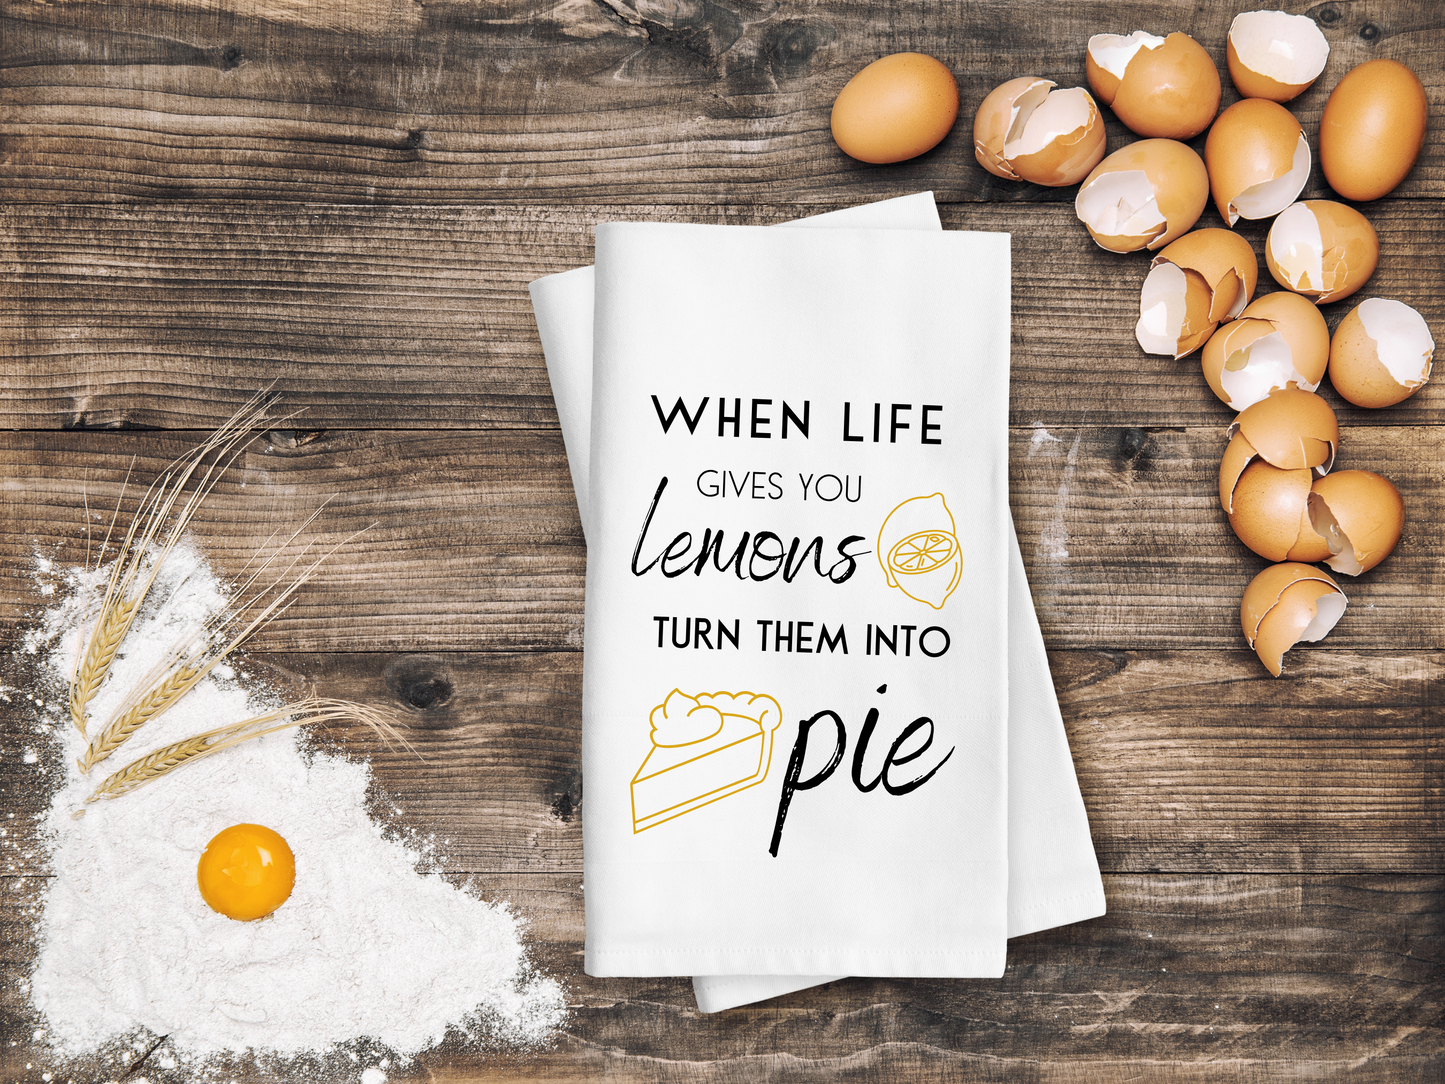 100% Cotton Tea Towel ∣ 28"x28" ∣ Funny Lemon Pie Design ∣ Add Comedy to Your Kitchen!